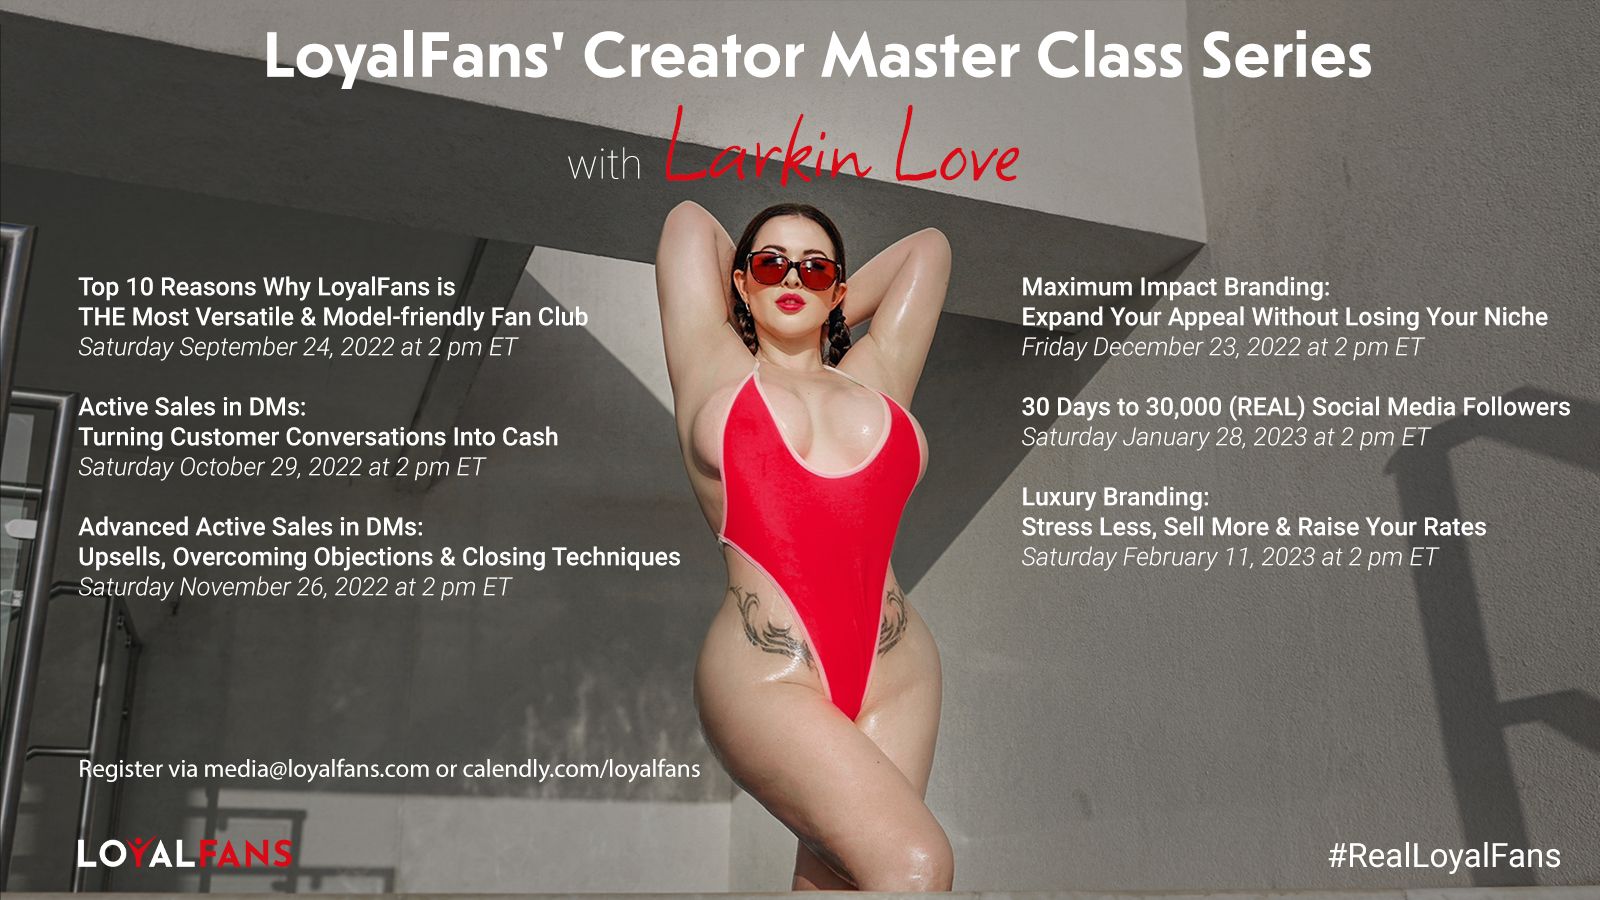 LoyalFans.com, Larkin Love Announce Creator Master Class Series